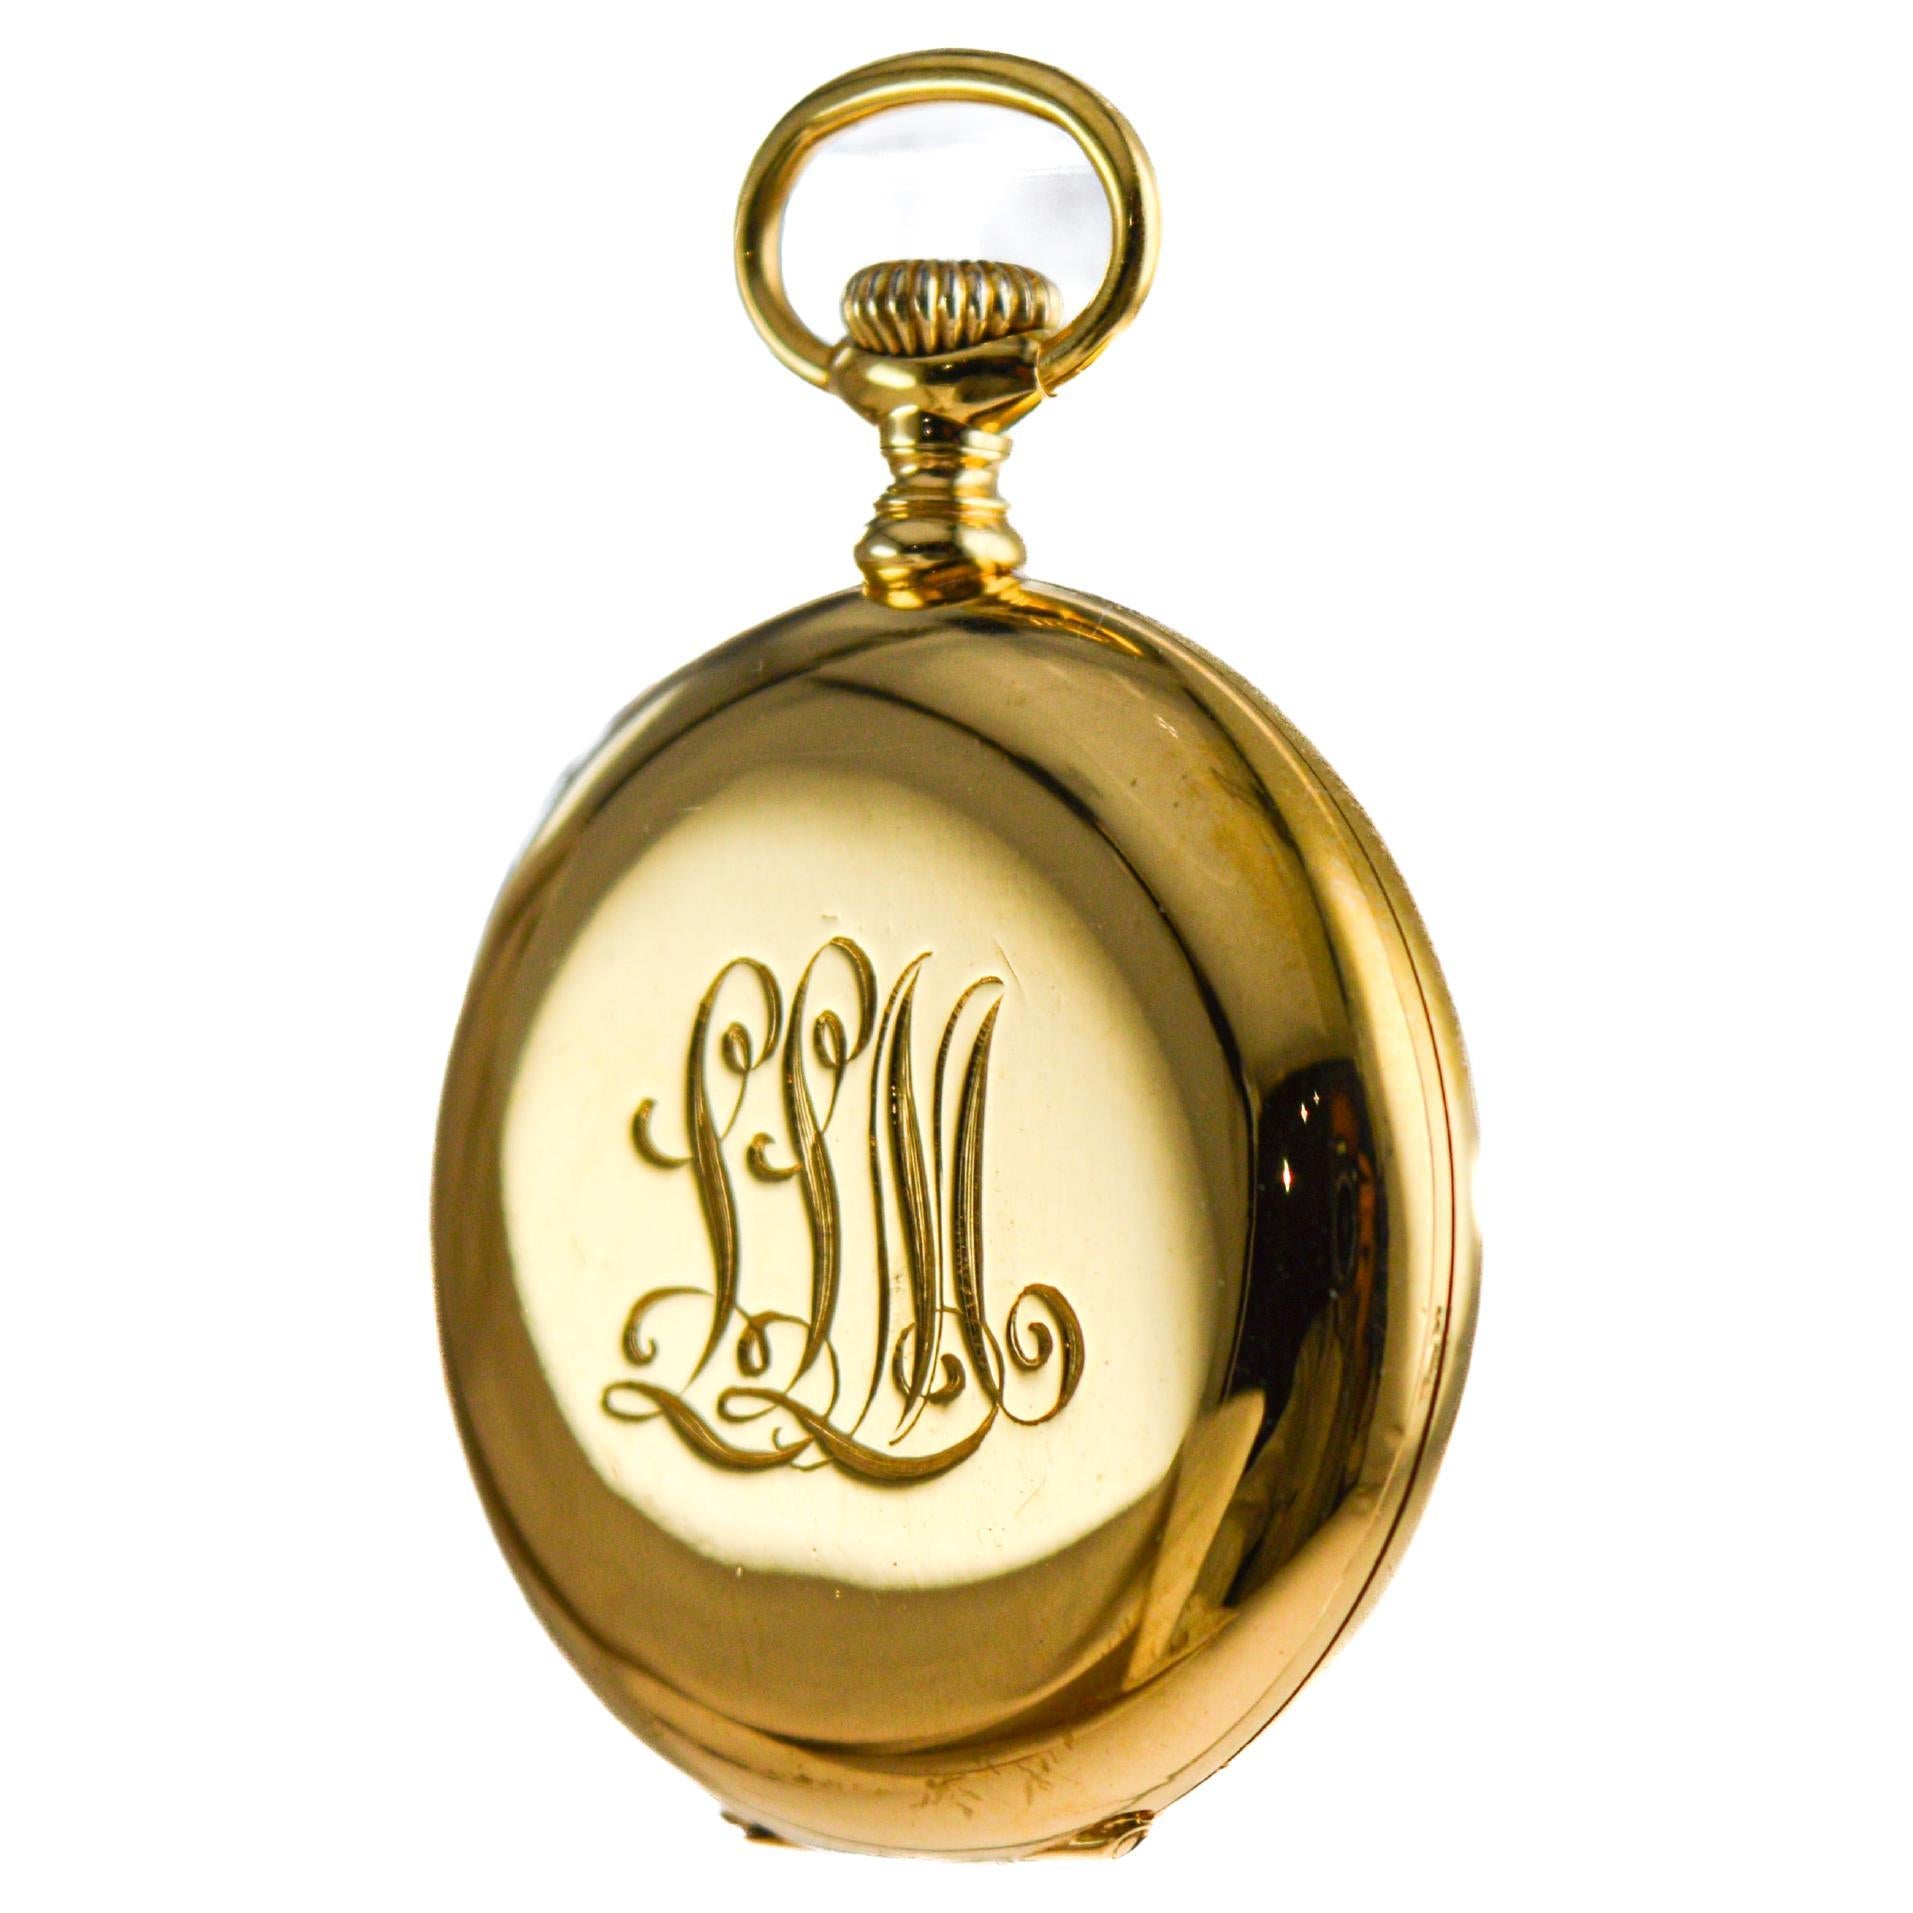 Tiffany & Co Montre pendentif en or 18 carats avec chaîne en or de 1912 et cadran en émail en vente 7